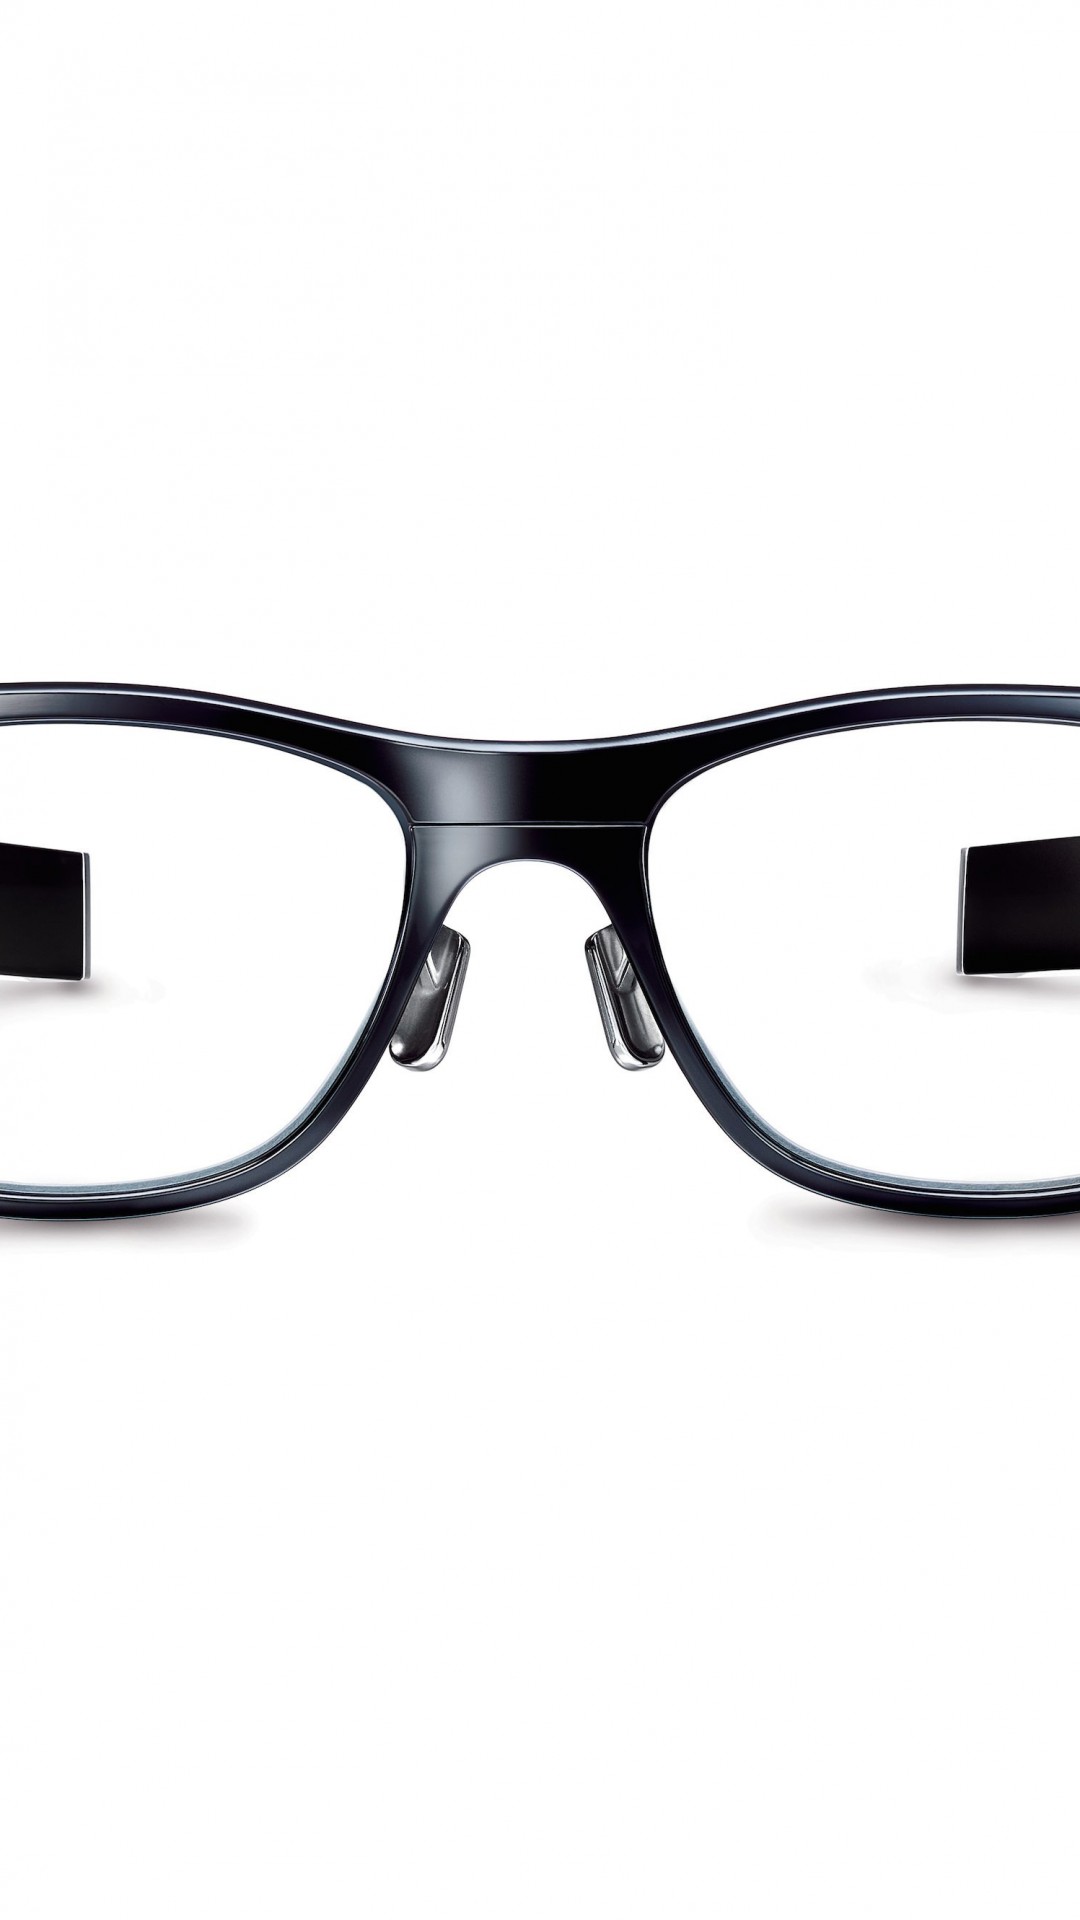 Jins Meme Smart Glasses Wallpaper for SAMSUNG Galaxy S4